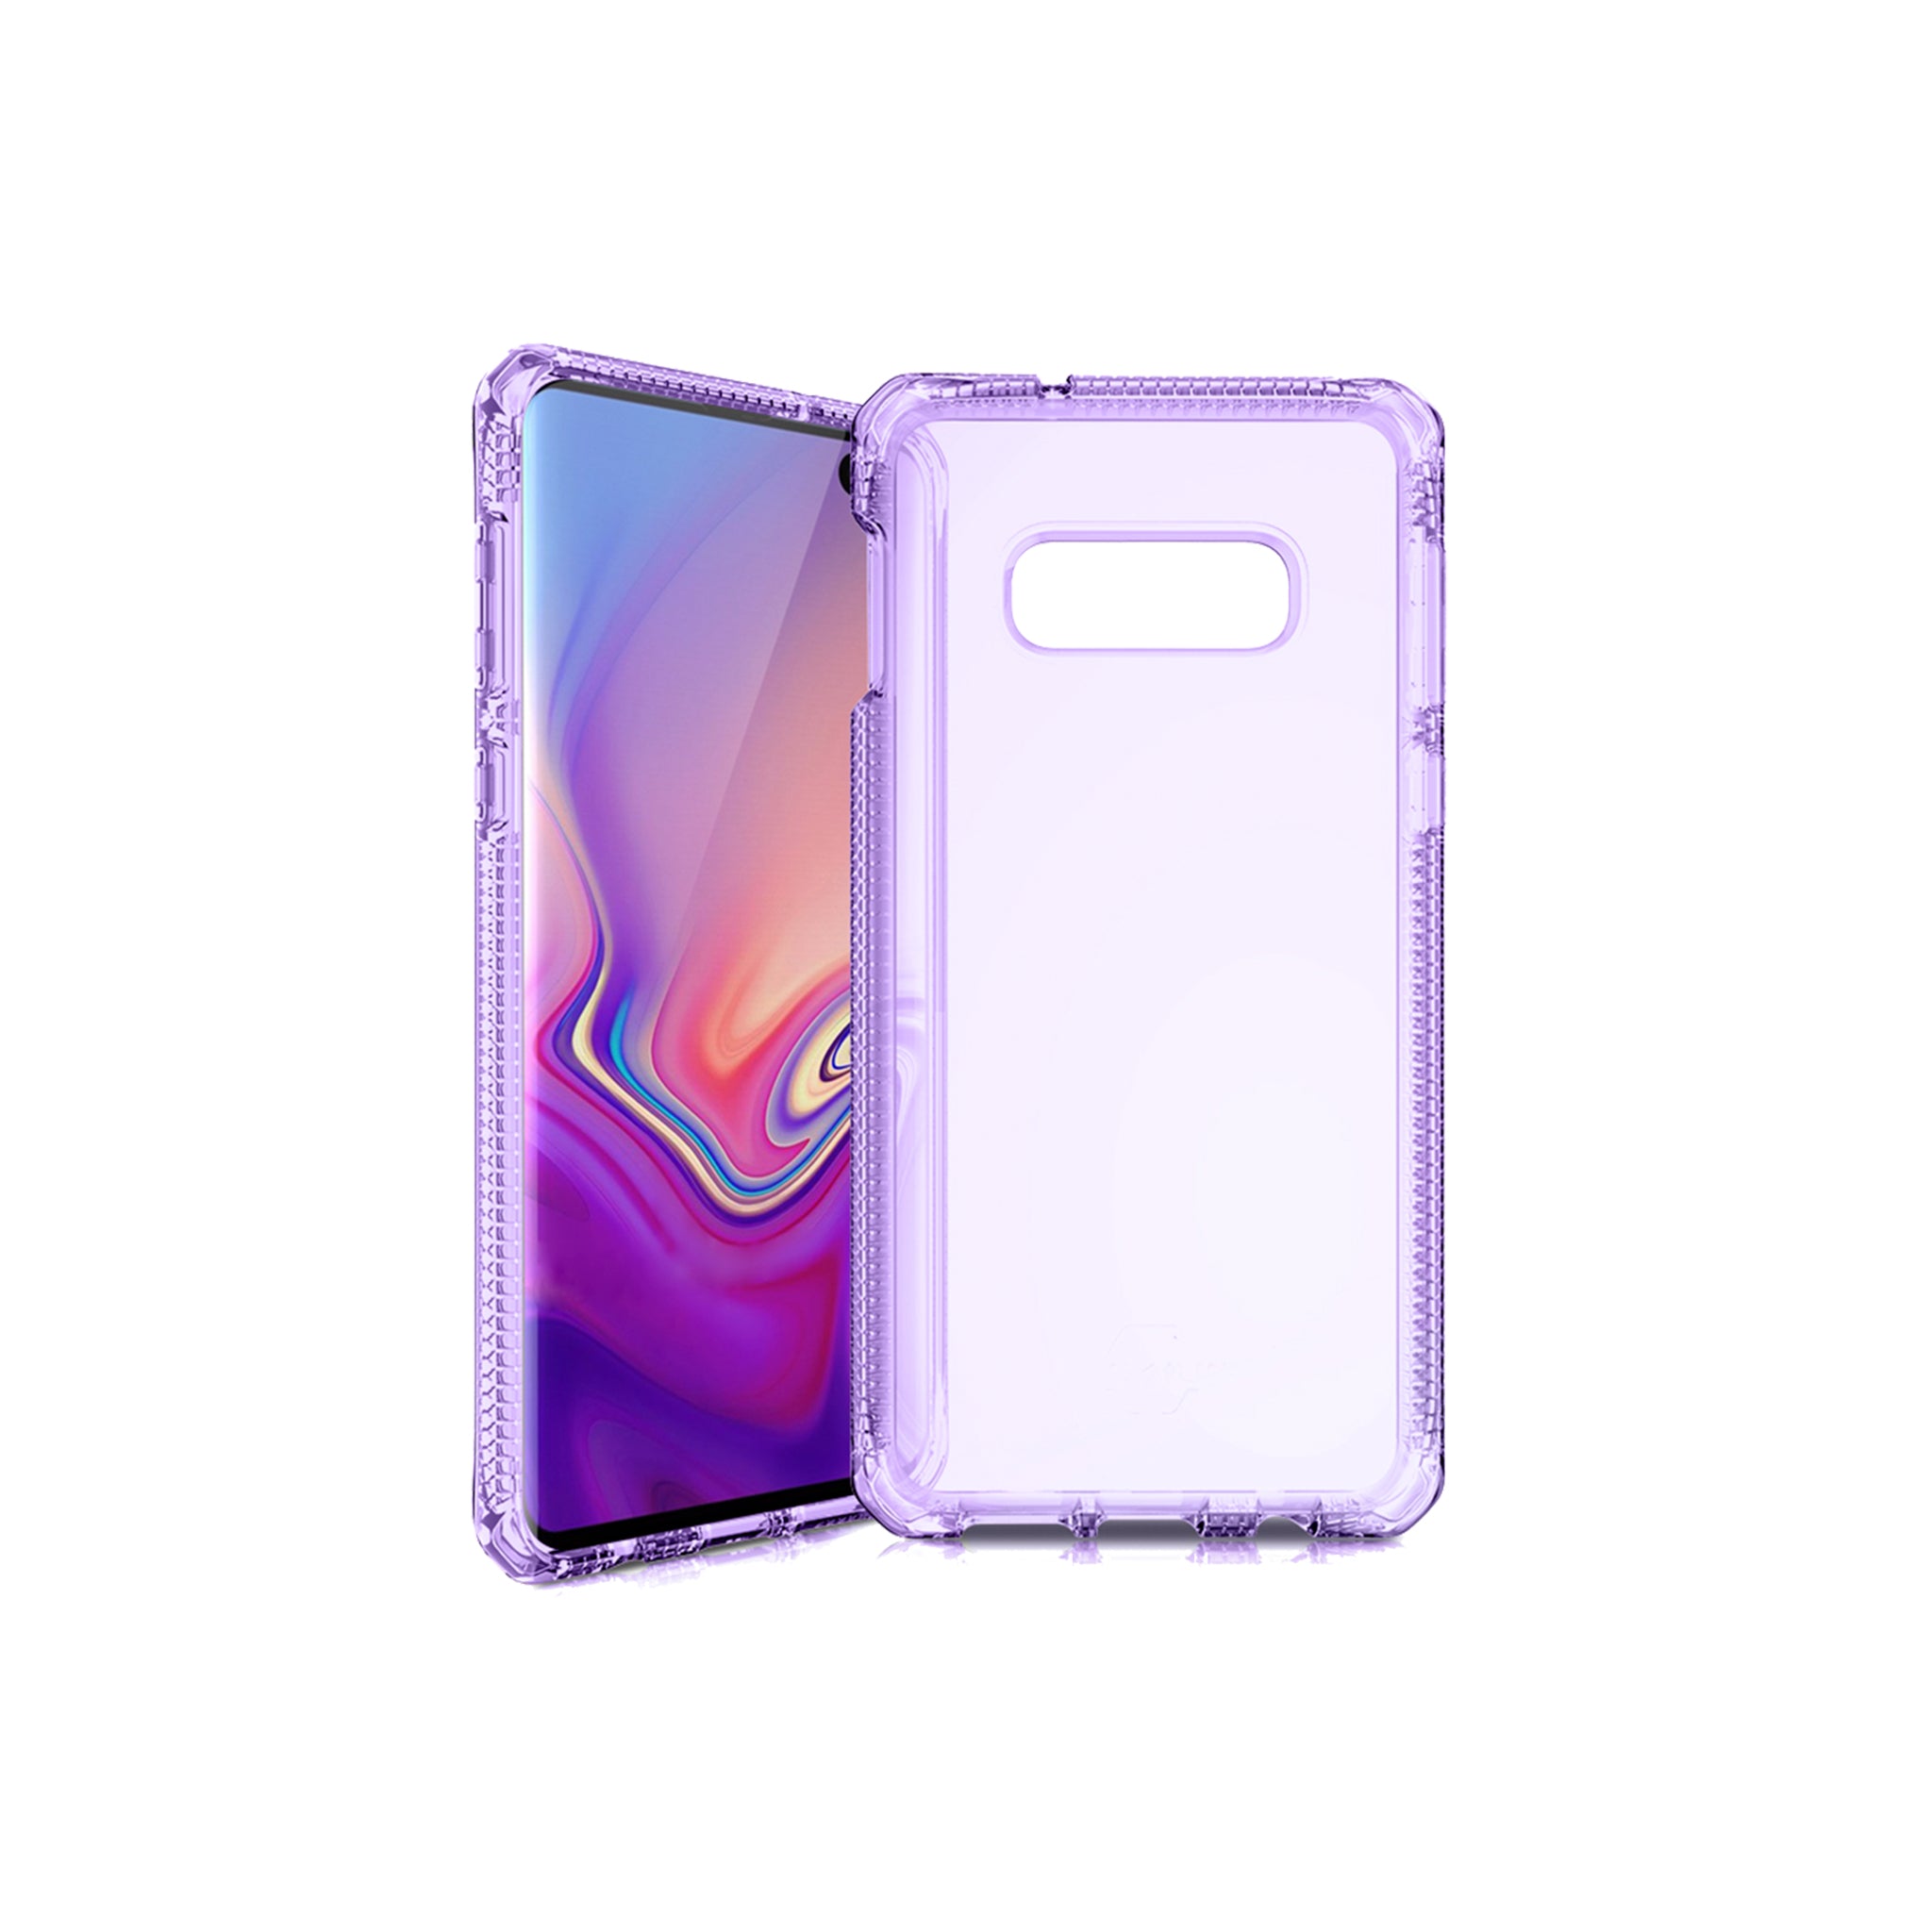 Itskins - Spectrum Clear Case For Samsung Galaxy S10e - Light Purple